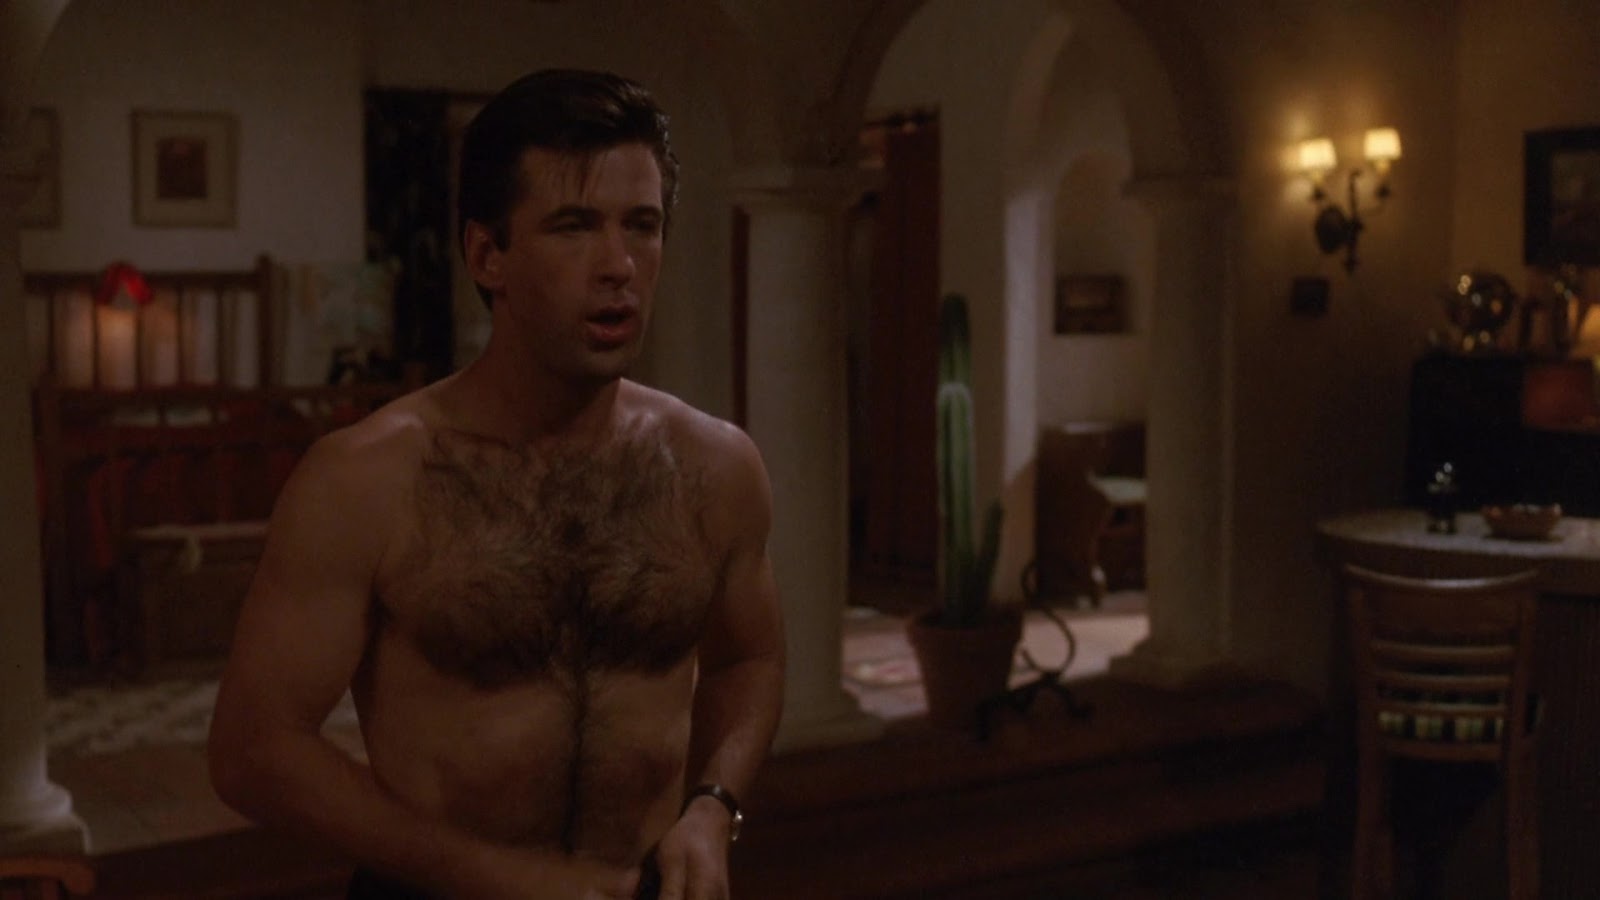 Alec Baldwin shirtless in The Marrying Man.